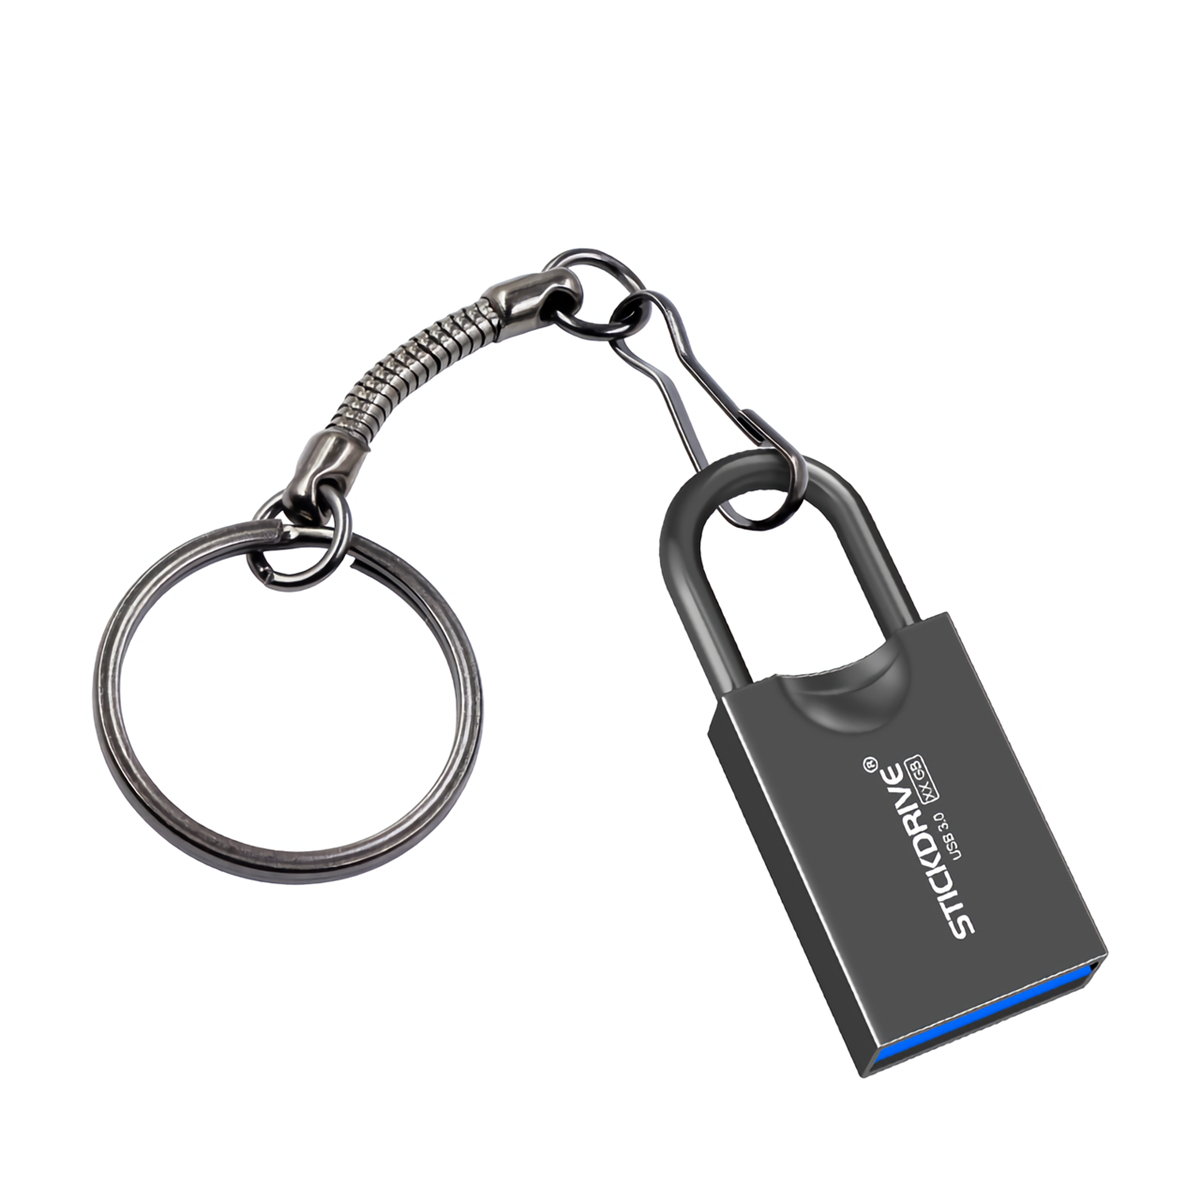 STICKDRIVE USB Flash Drive 64GB / 128GB Metal Lock Shape USB3.0 Armazenamento Externo Memória Disco U Disco Pendrive